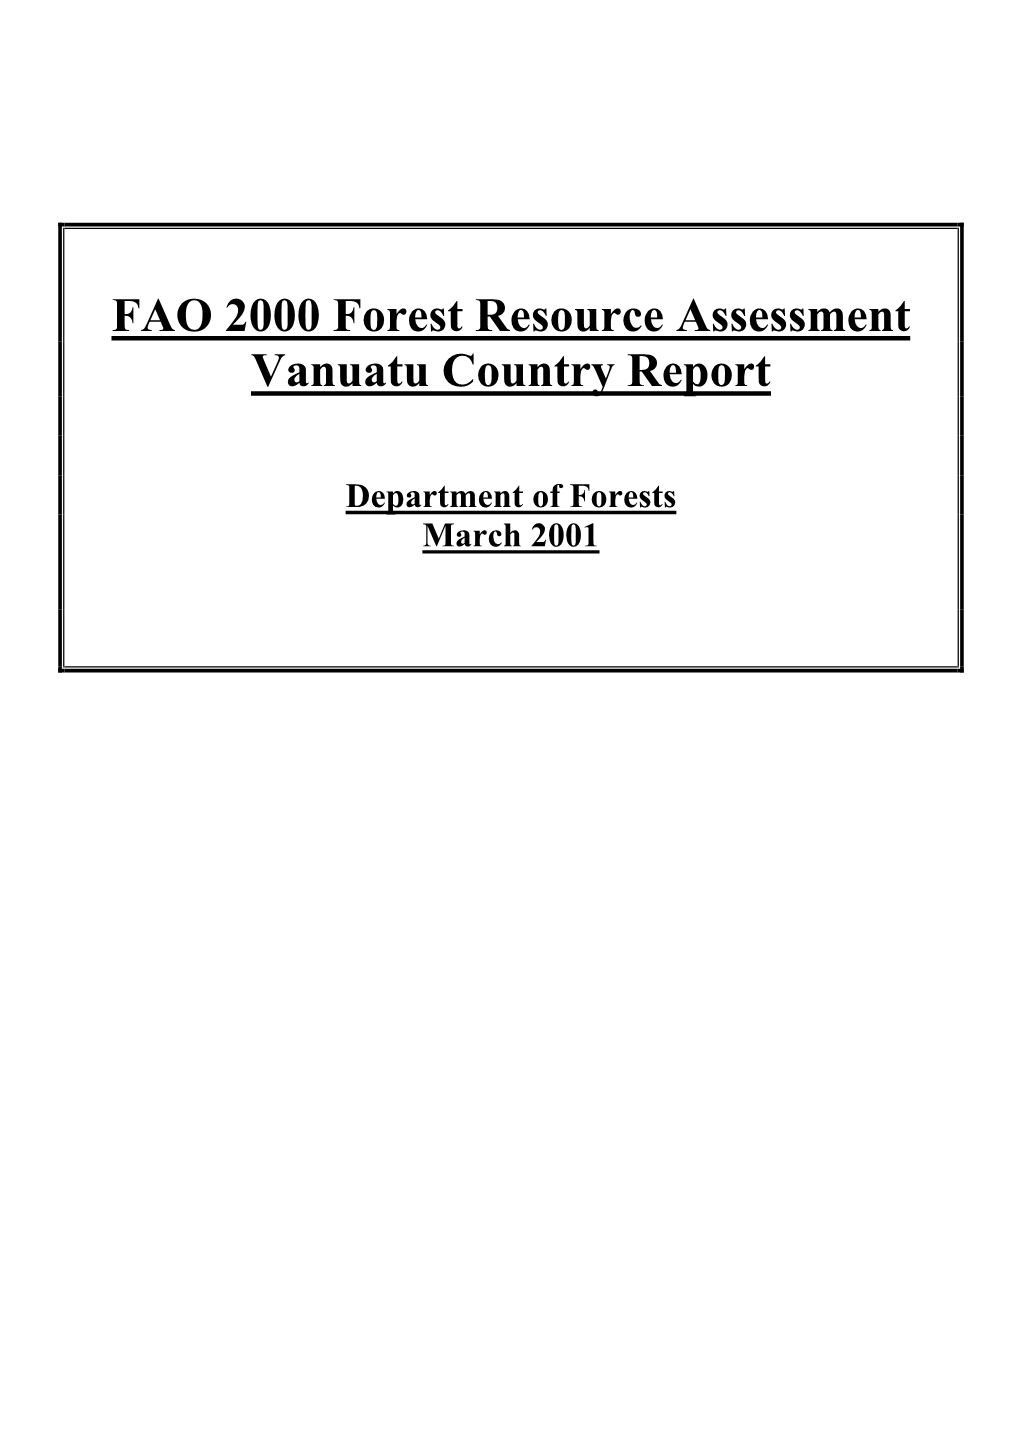 Vanuatu Forest Resources Assessment FRA 2000